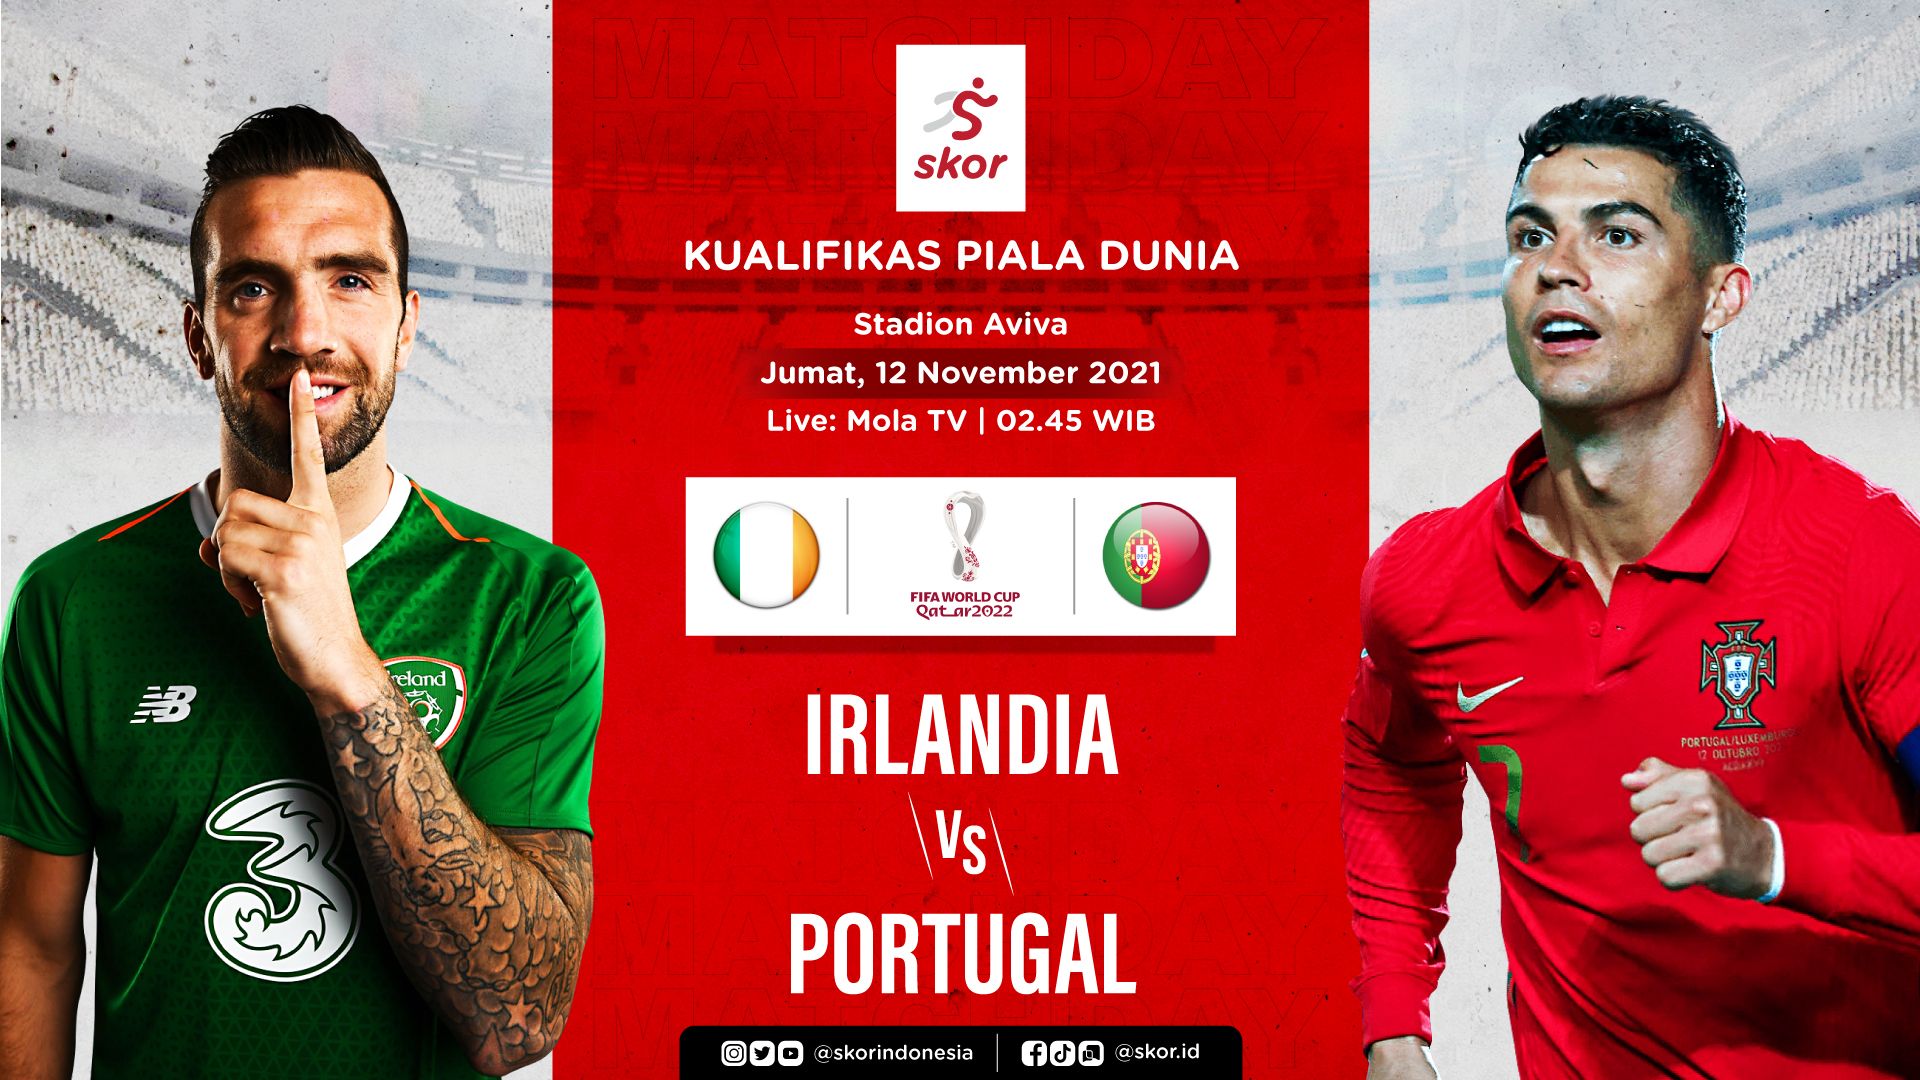 Portugal vs irlandia